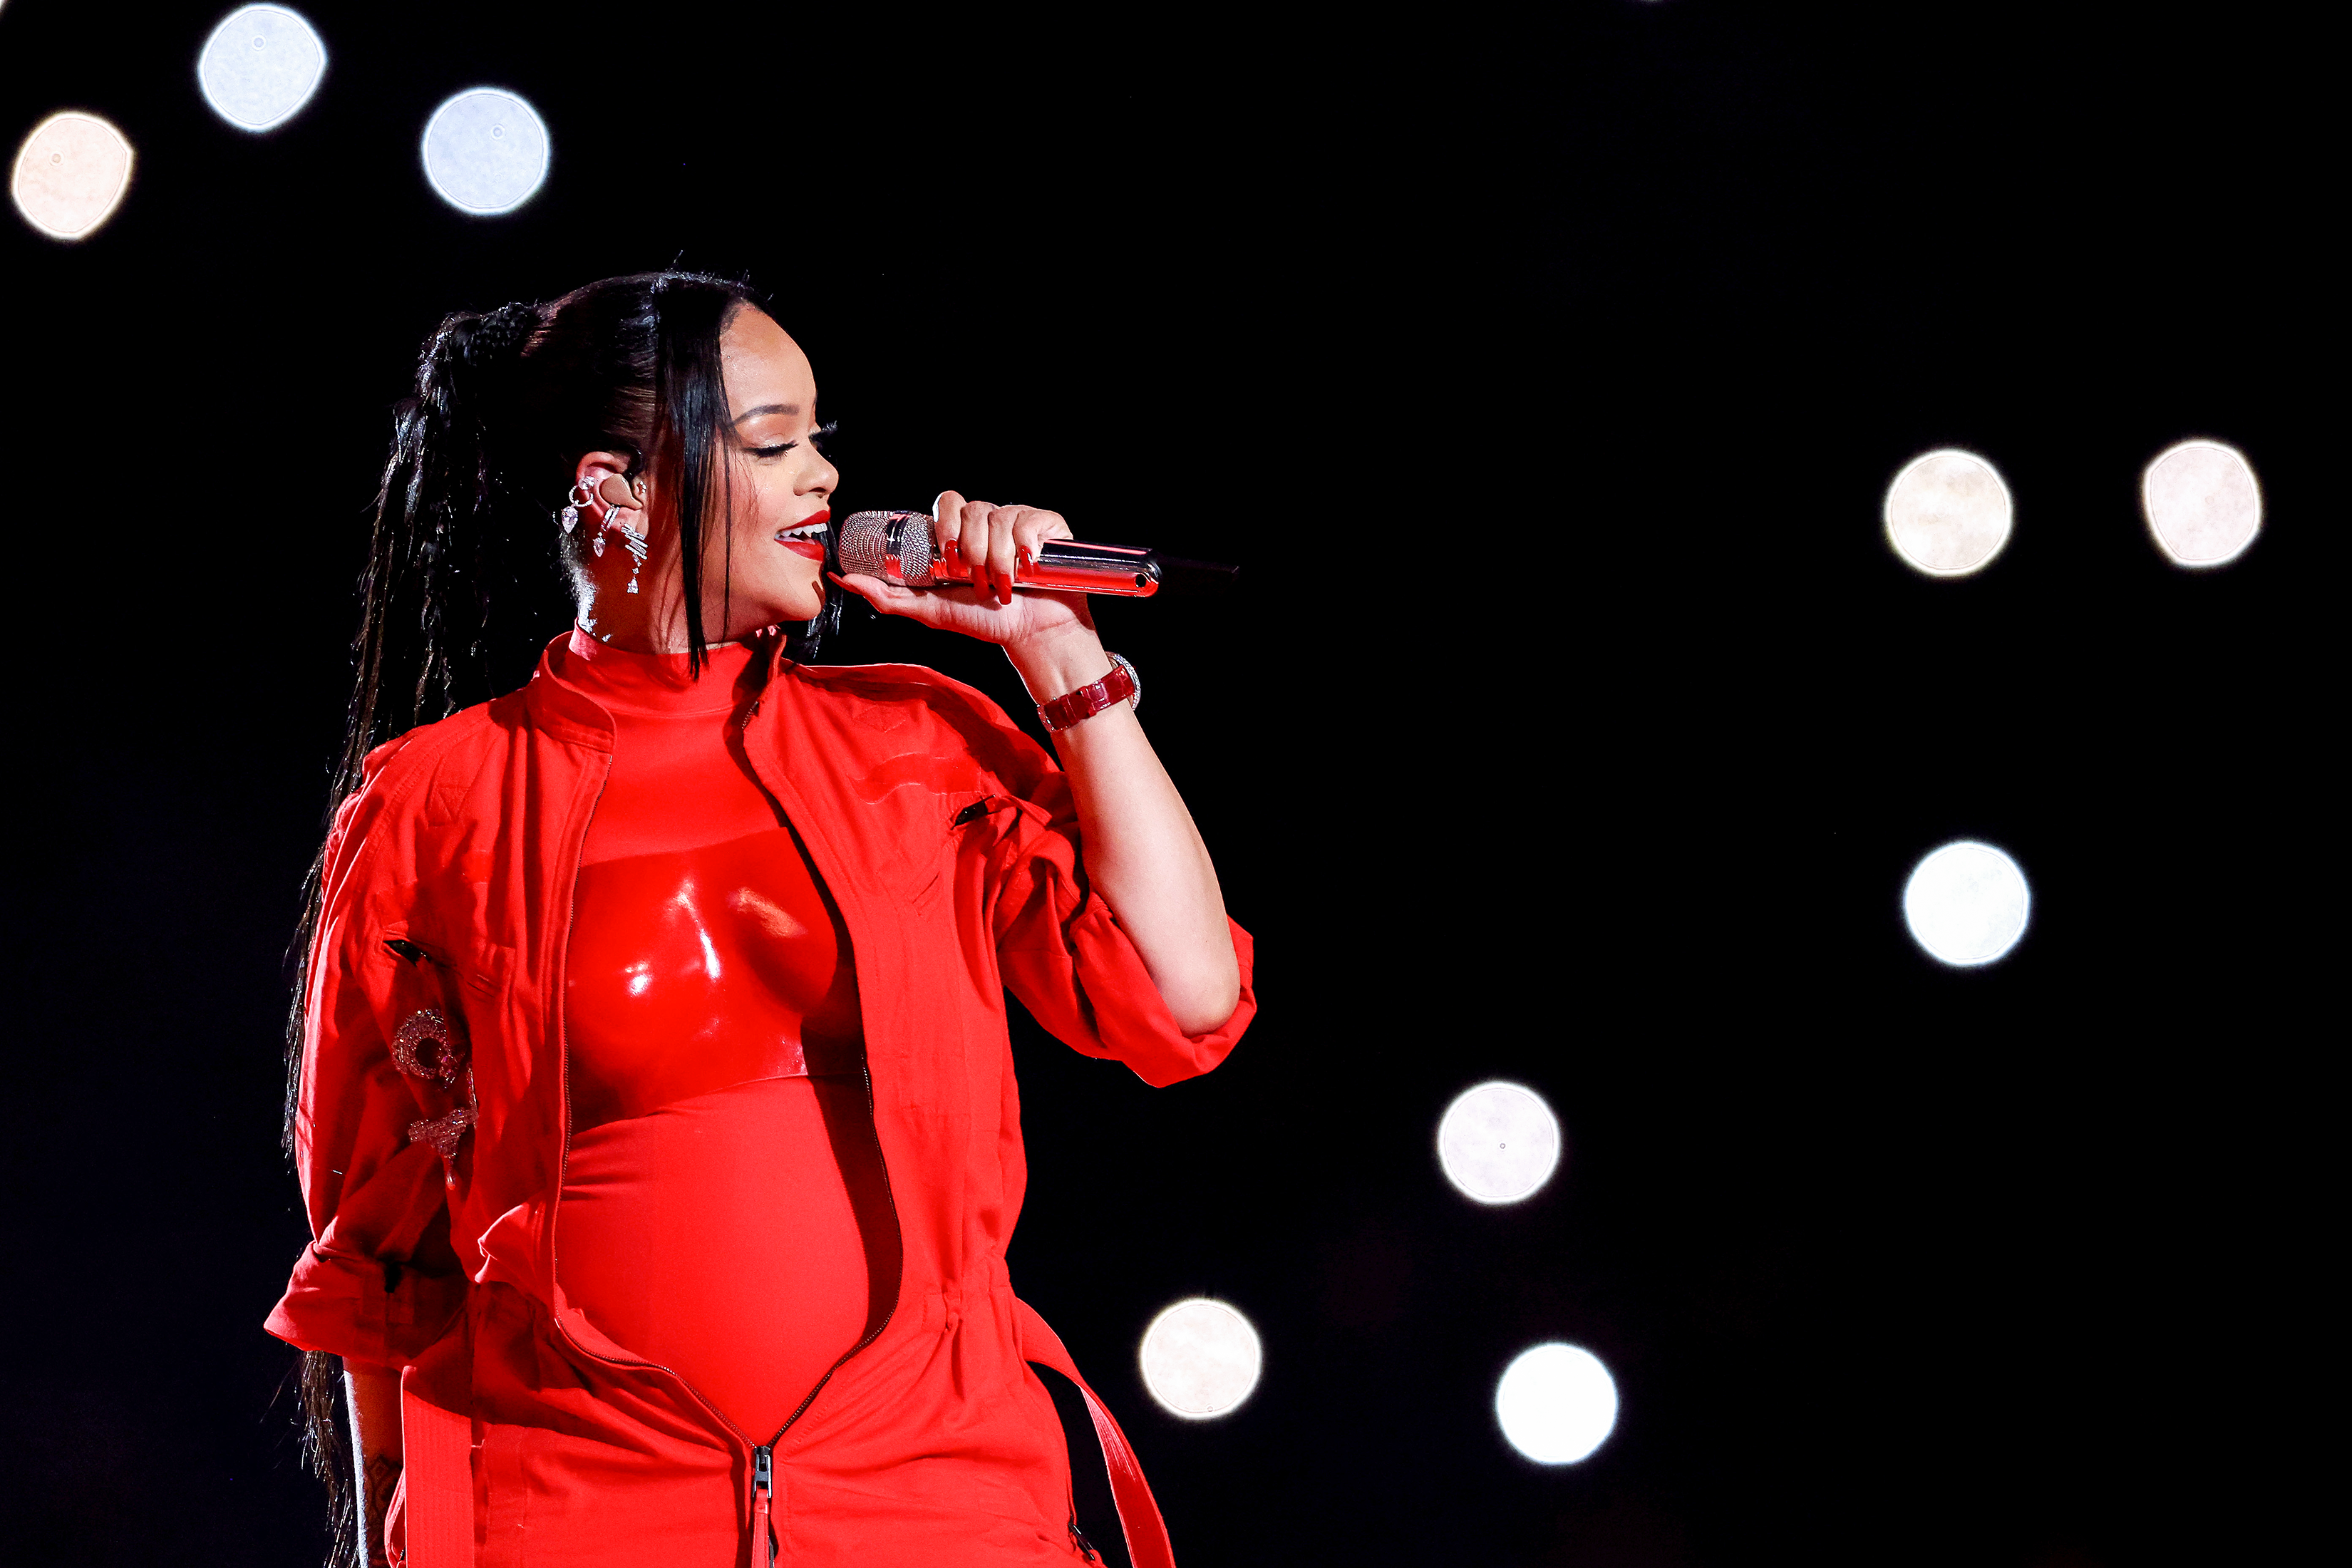 How to Stream the 2023 Super Bowl and Rihanna's Halftime Show